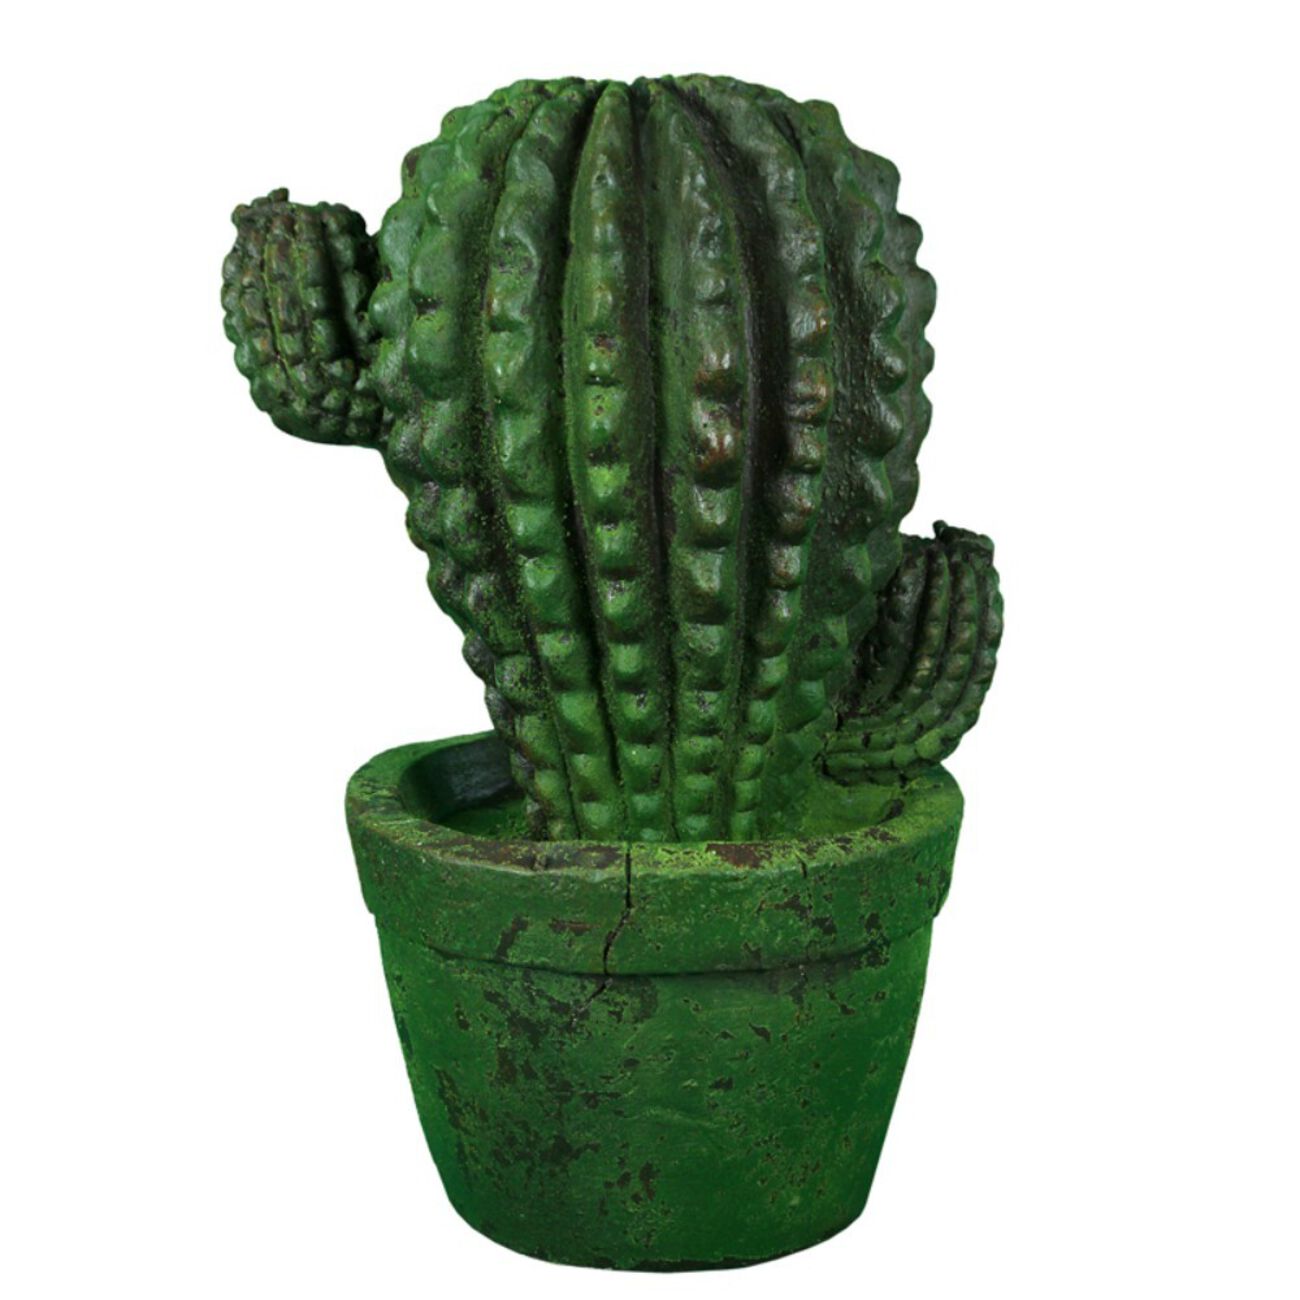 Potted Evergreen Distressed Saguaro MGO CactusDecoration, Green